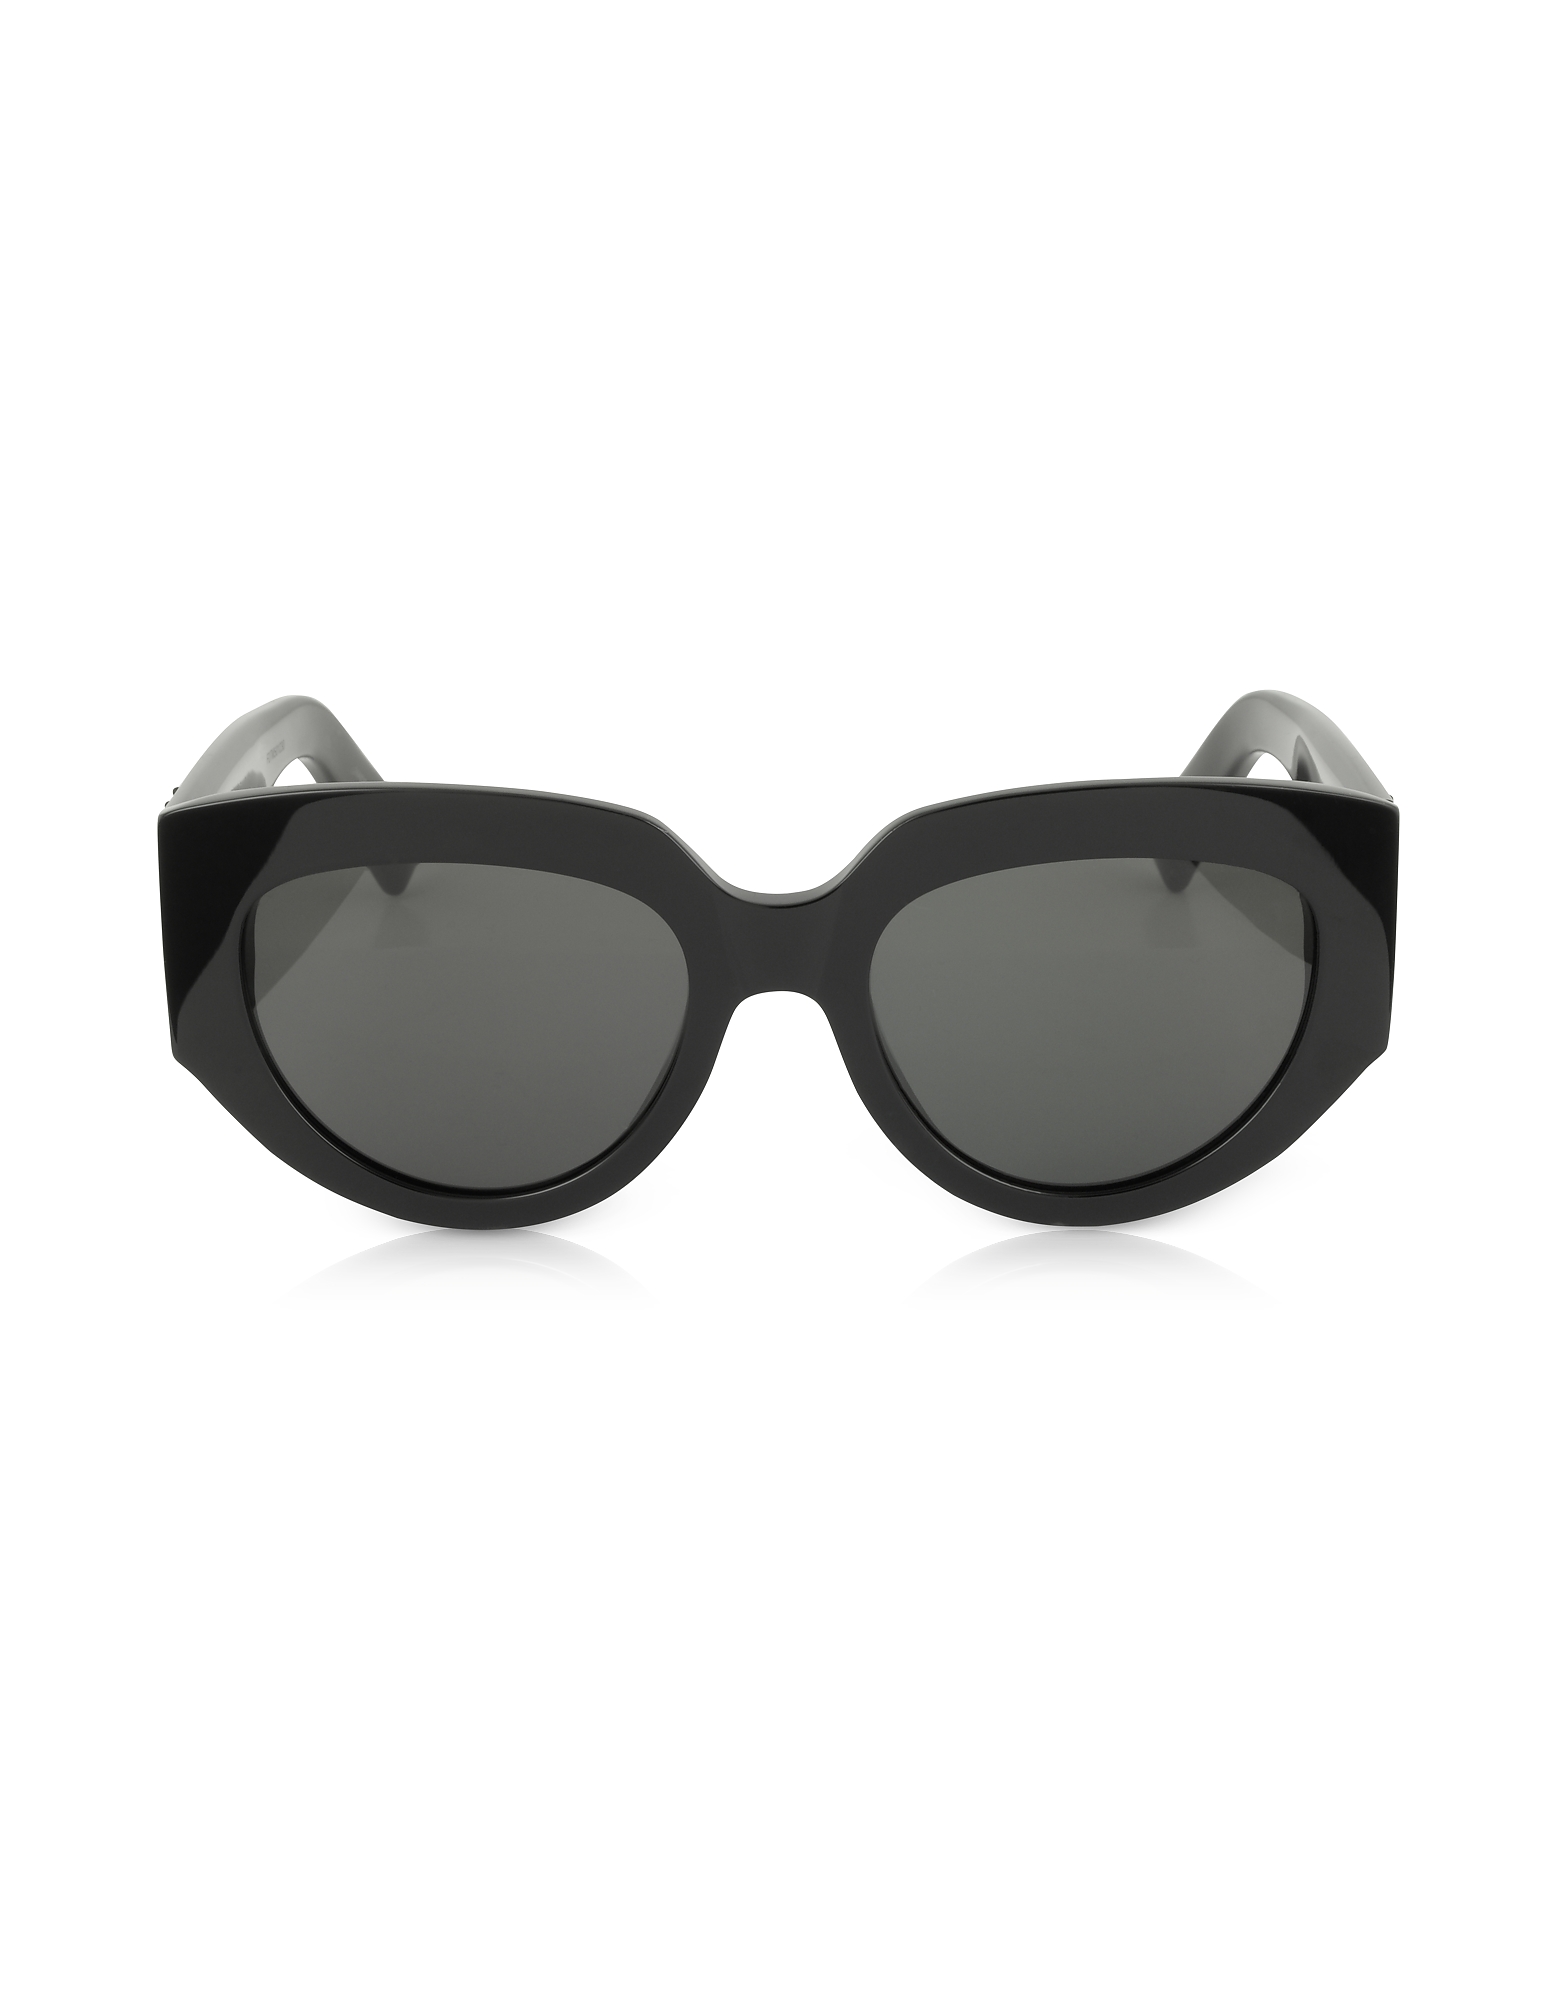 

SL M26 ROPE Black Acetate Square Cat-Eye Frame Sunglasses, Black/gray